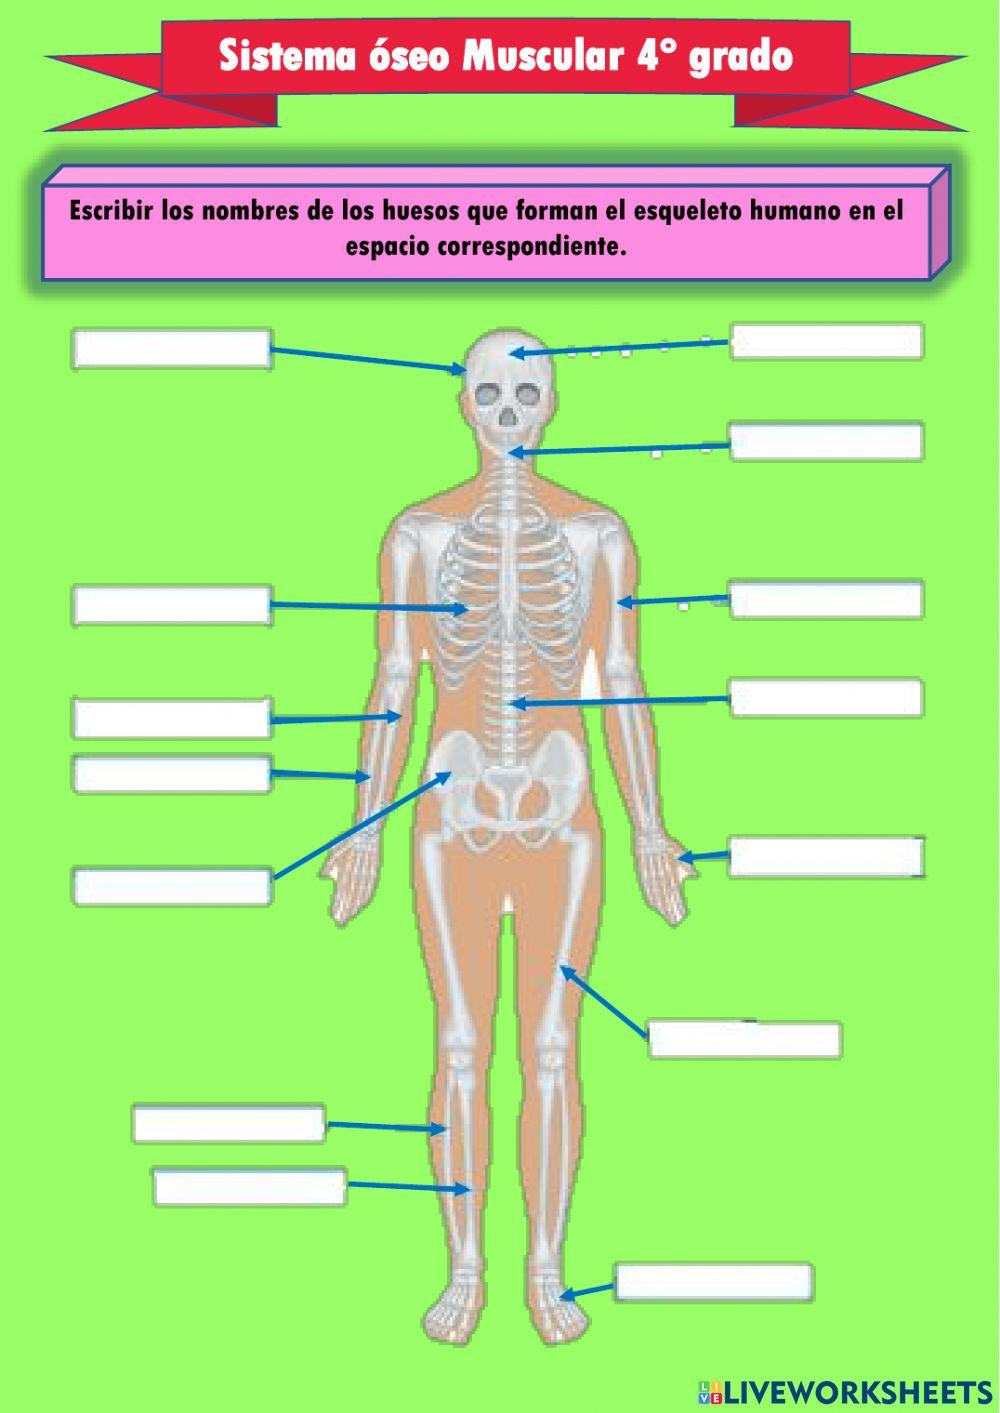 Sistema óseo muscular 4° grado